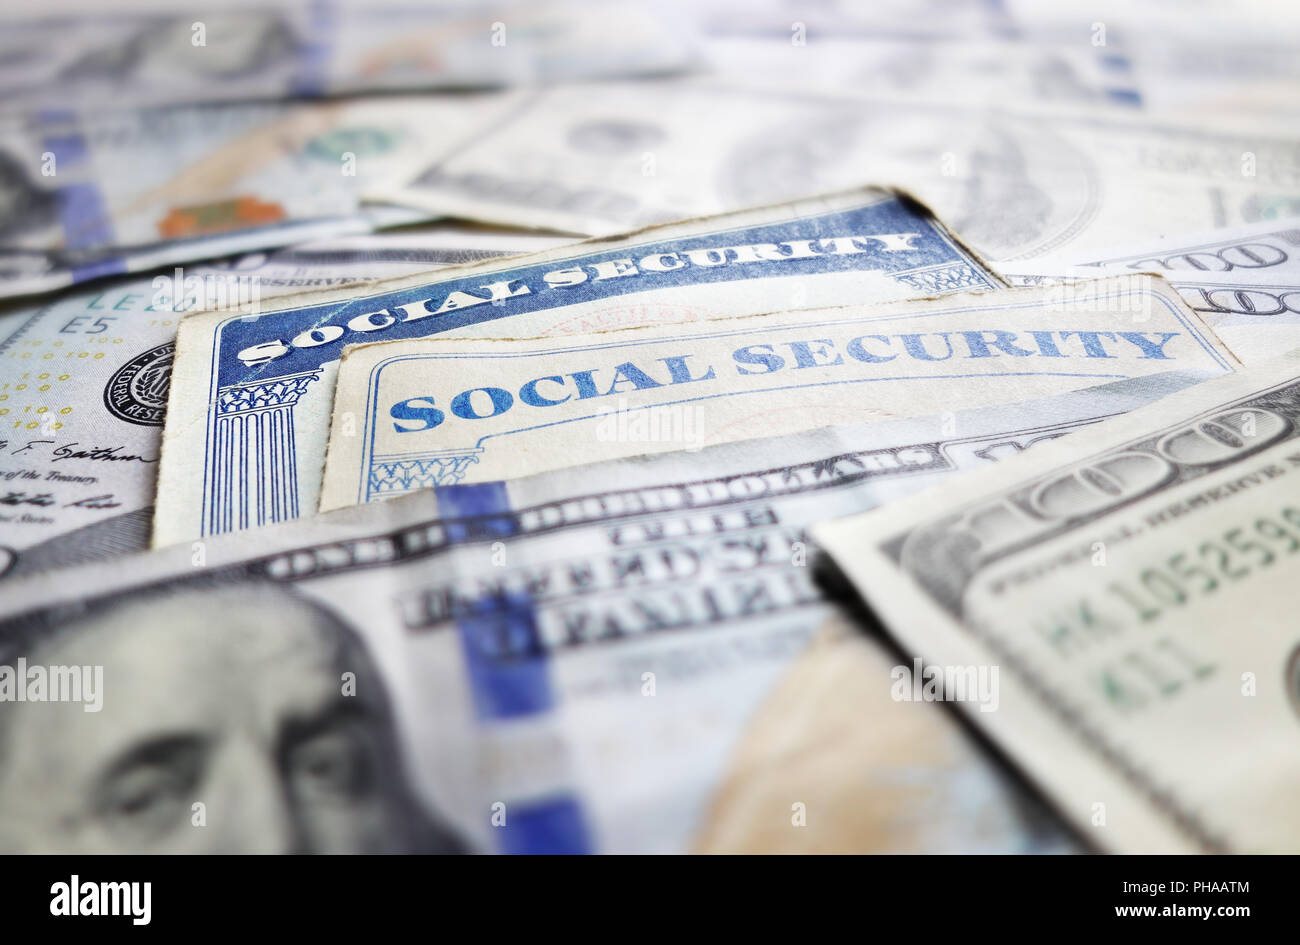 Social Security cards Stock Photo